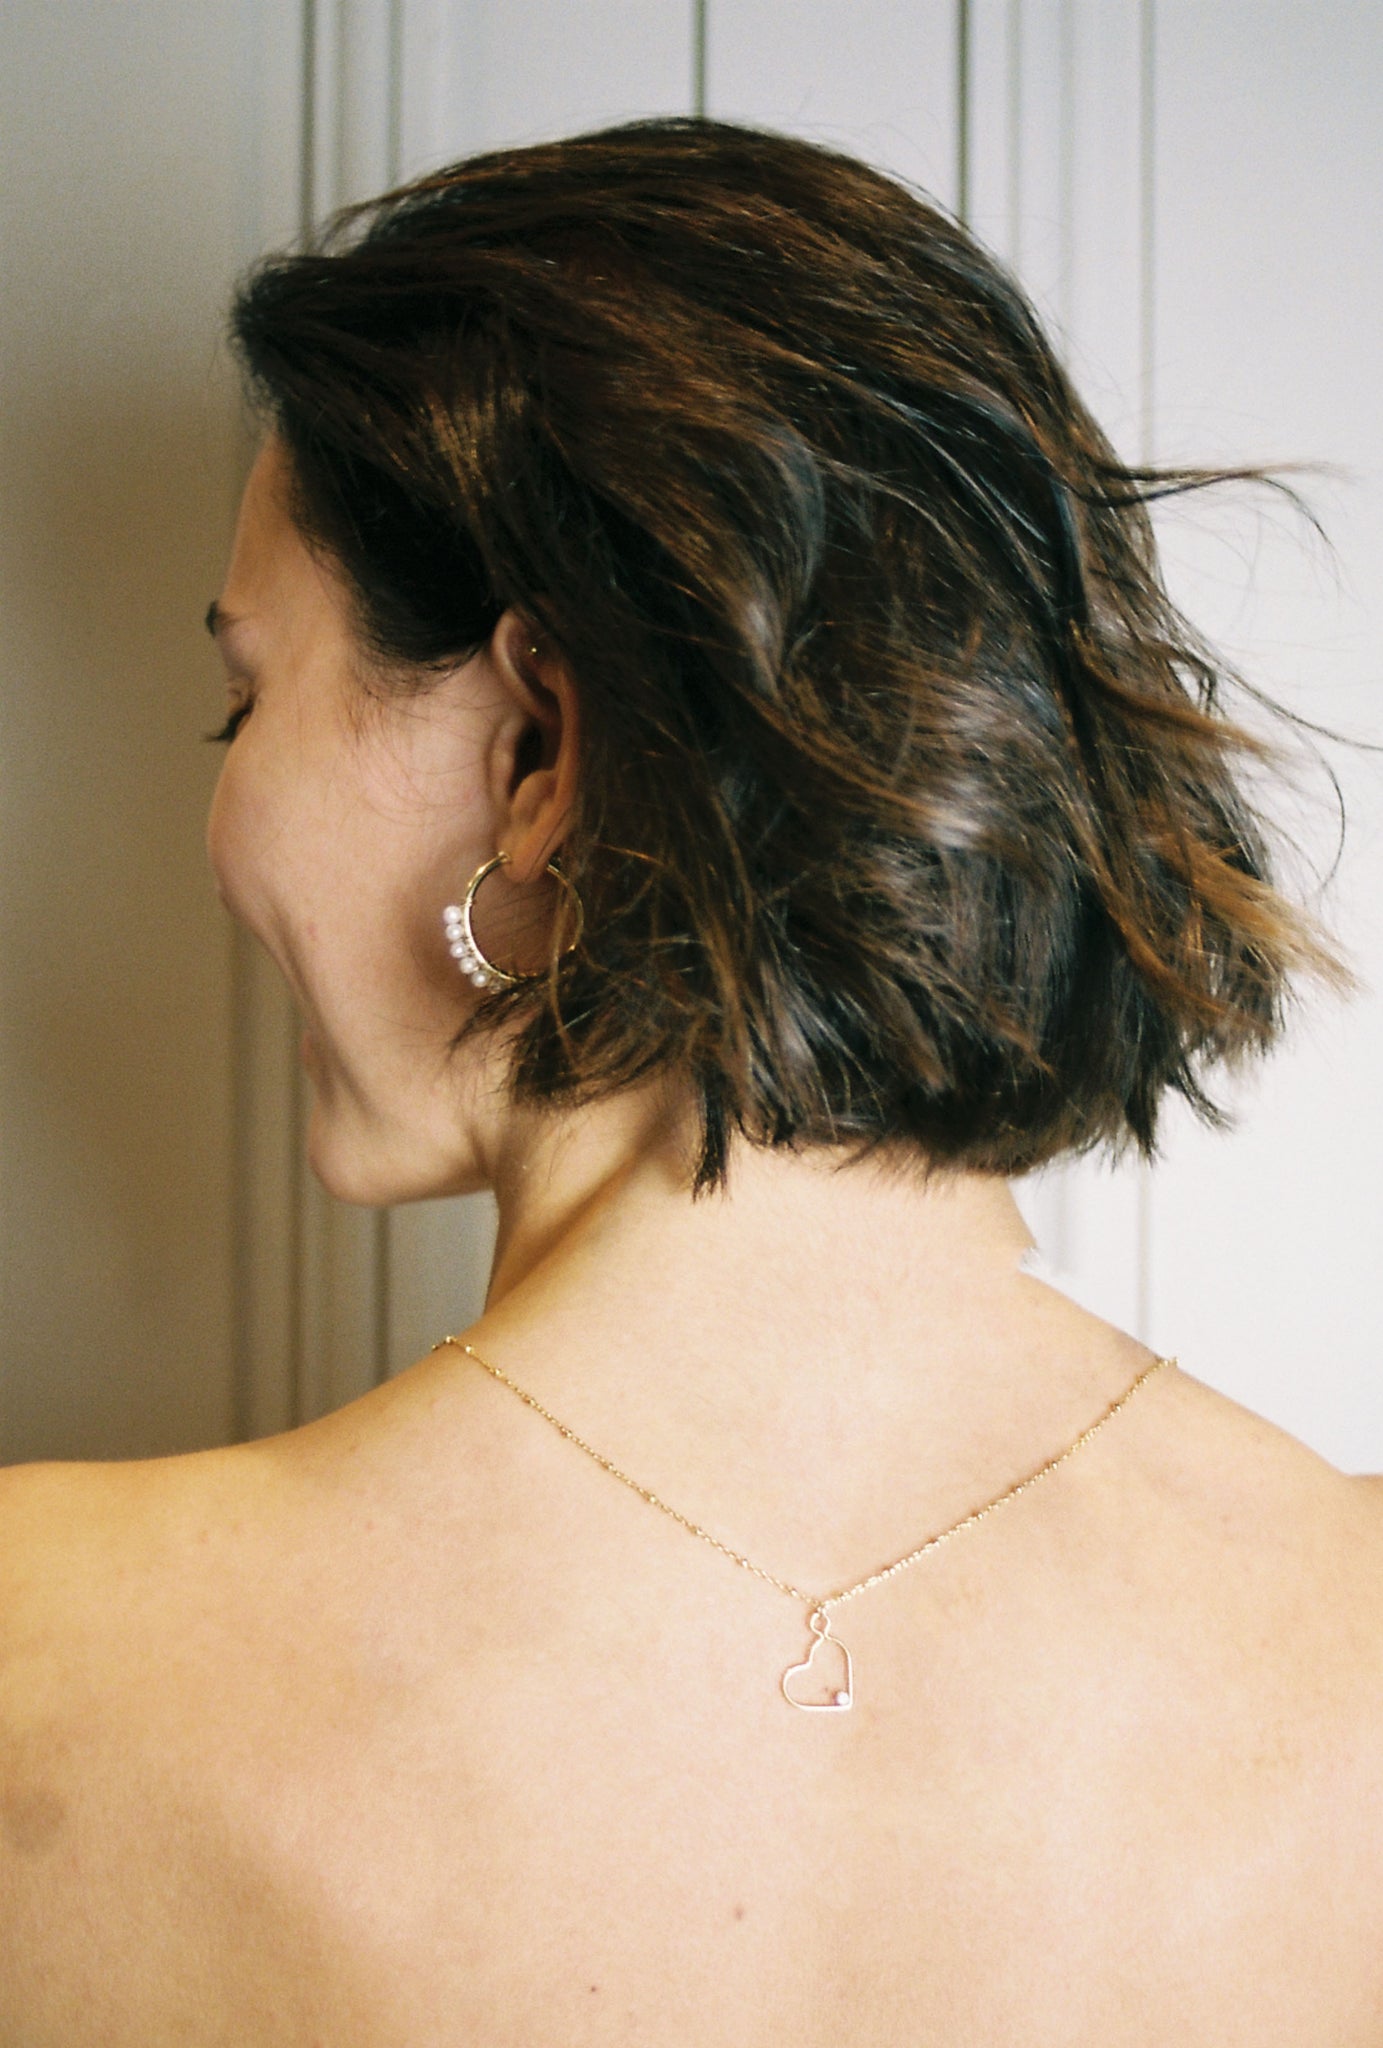 The Aventurine necklace